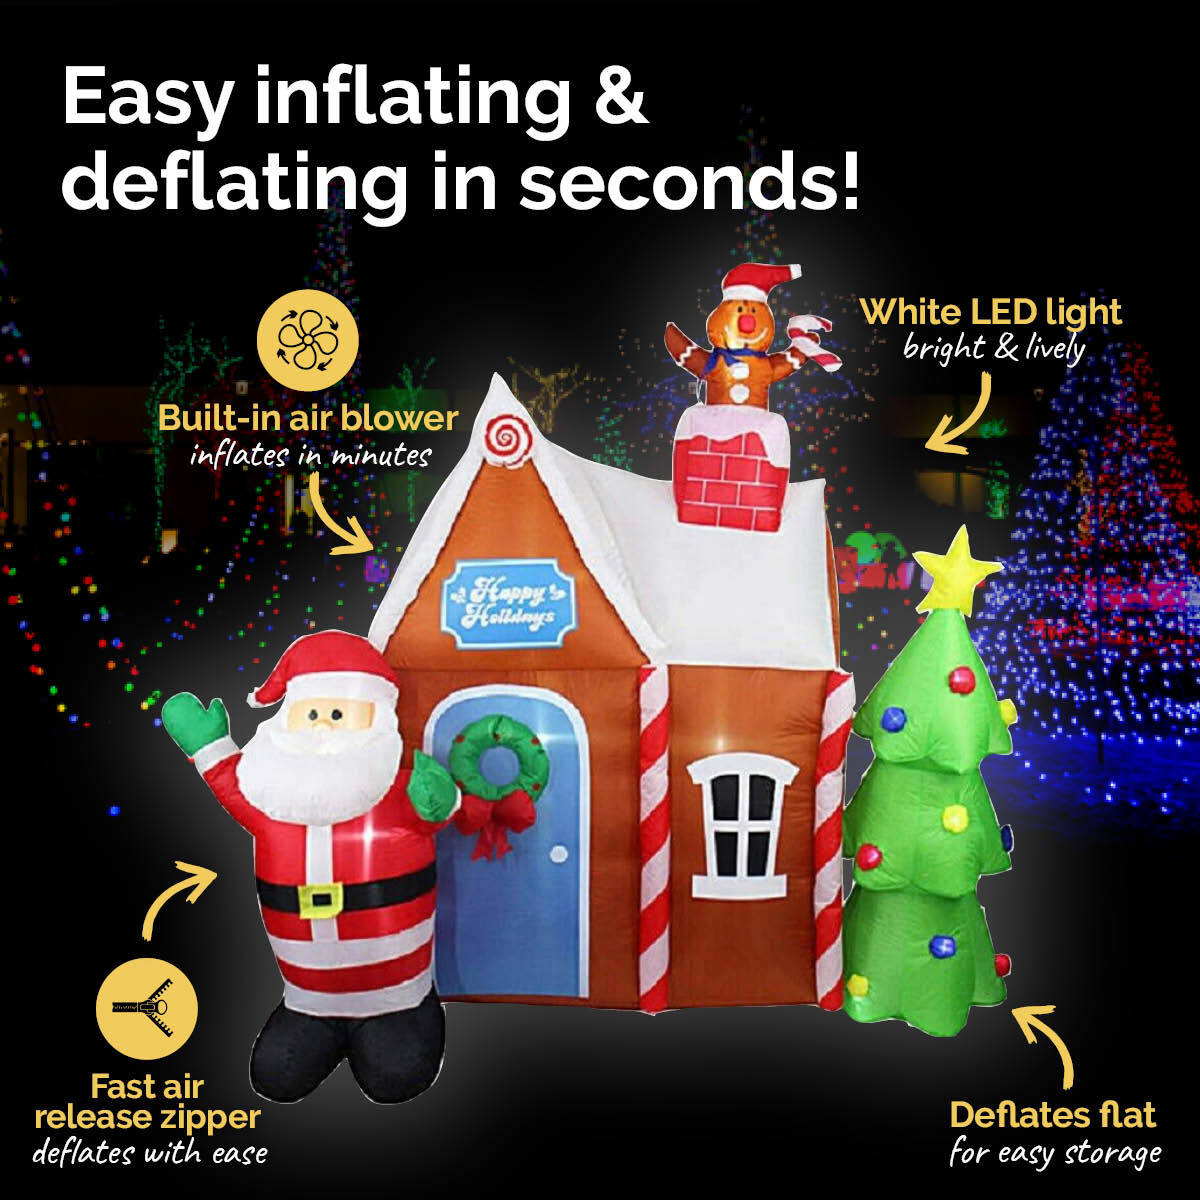 Christmas By Sas 1.8m Santa & Hot Air Balloon Self Inflating LED Lighting - Little Kids Business